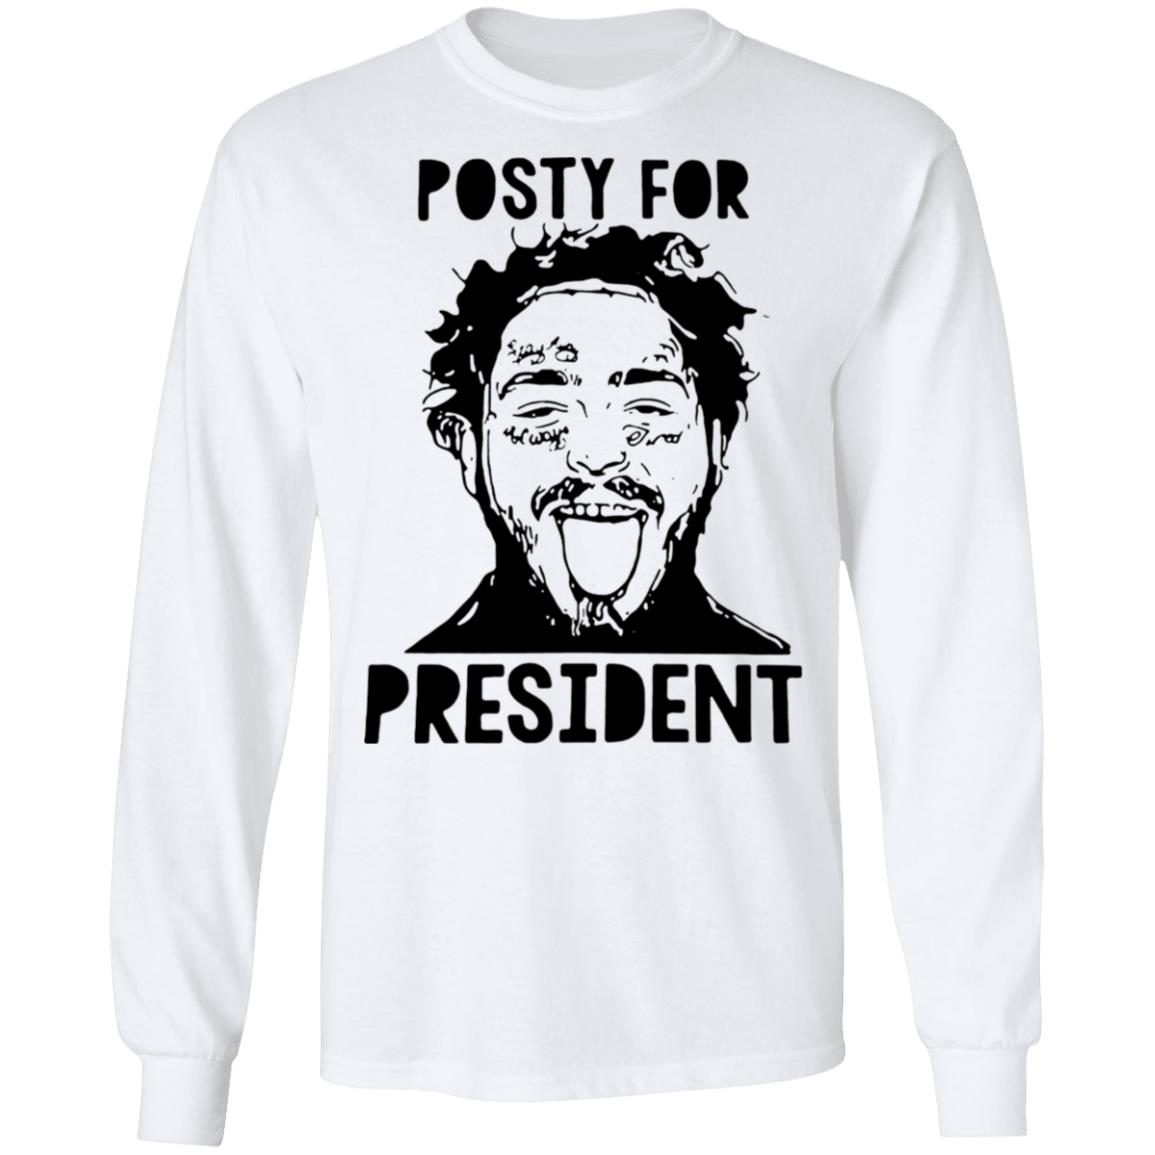 Post Malone Posty For President Shirt